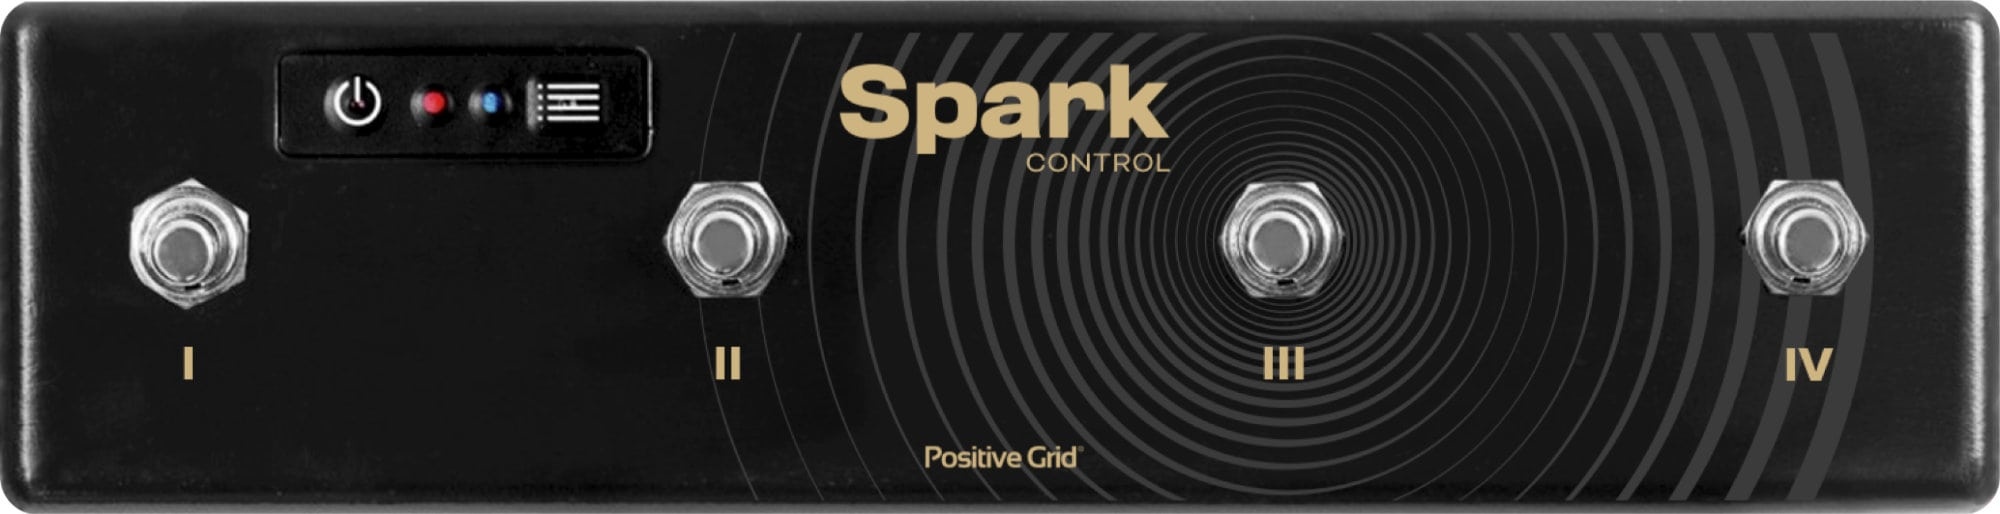 Positive Grid Spark Control